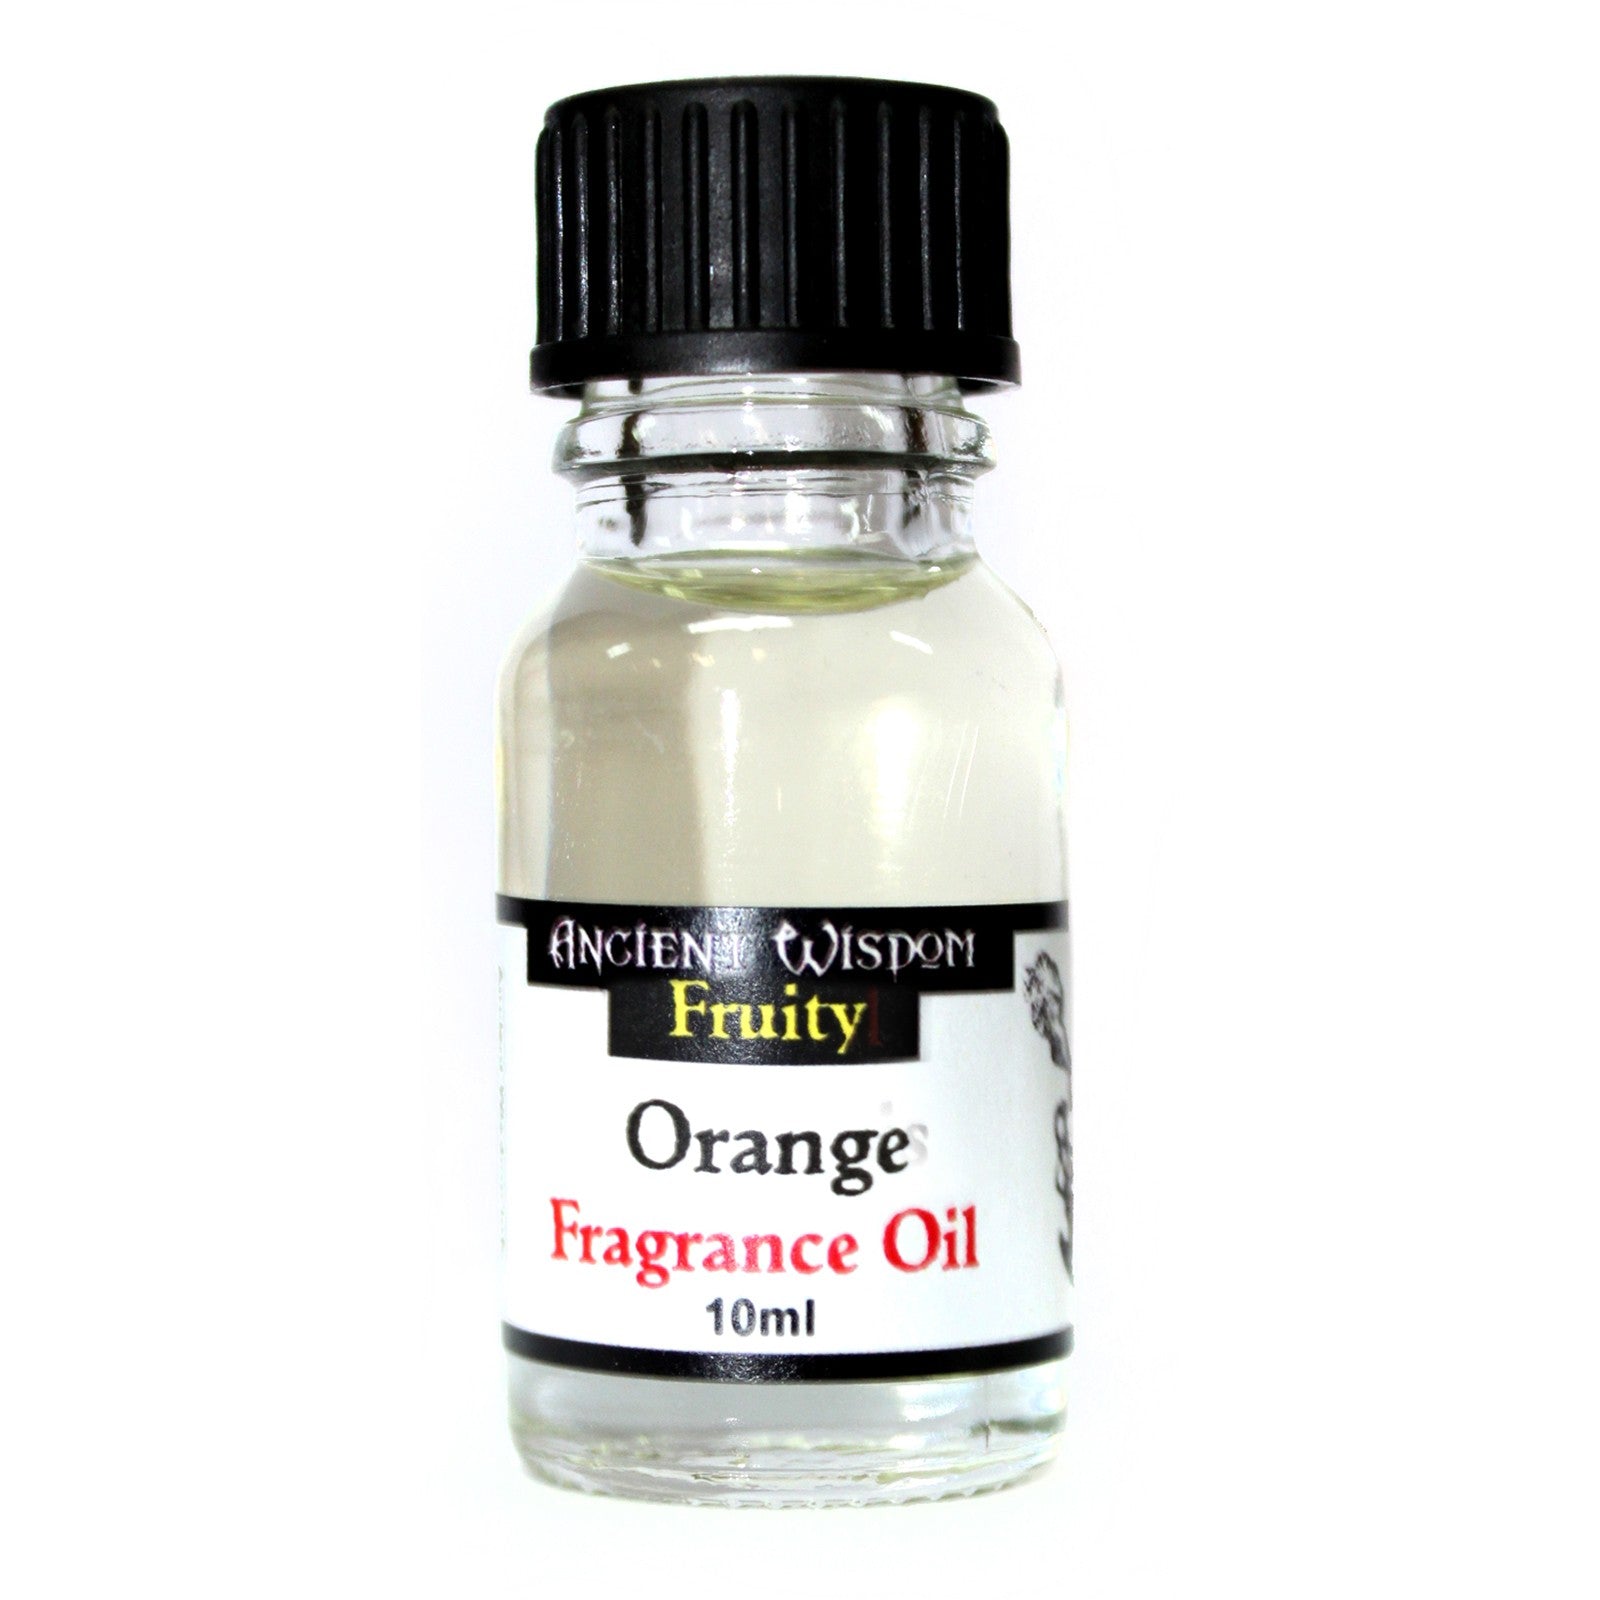 View 10ml Orange Fragrance Oil information